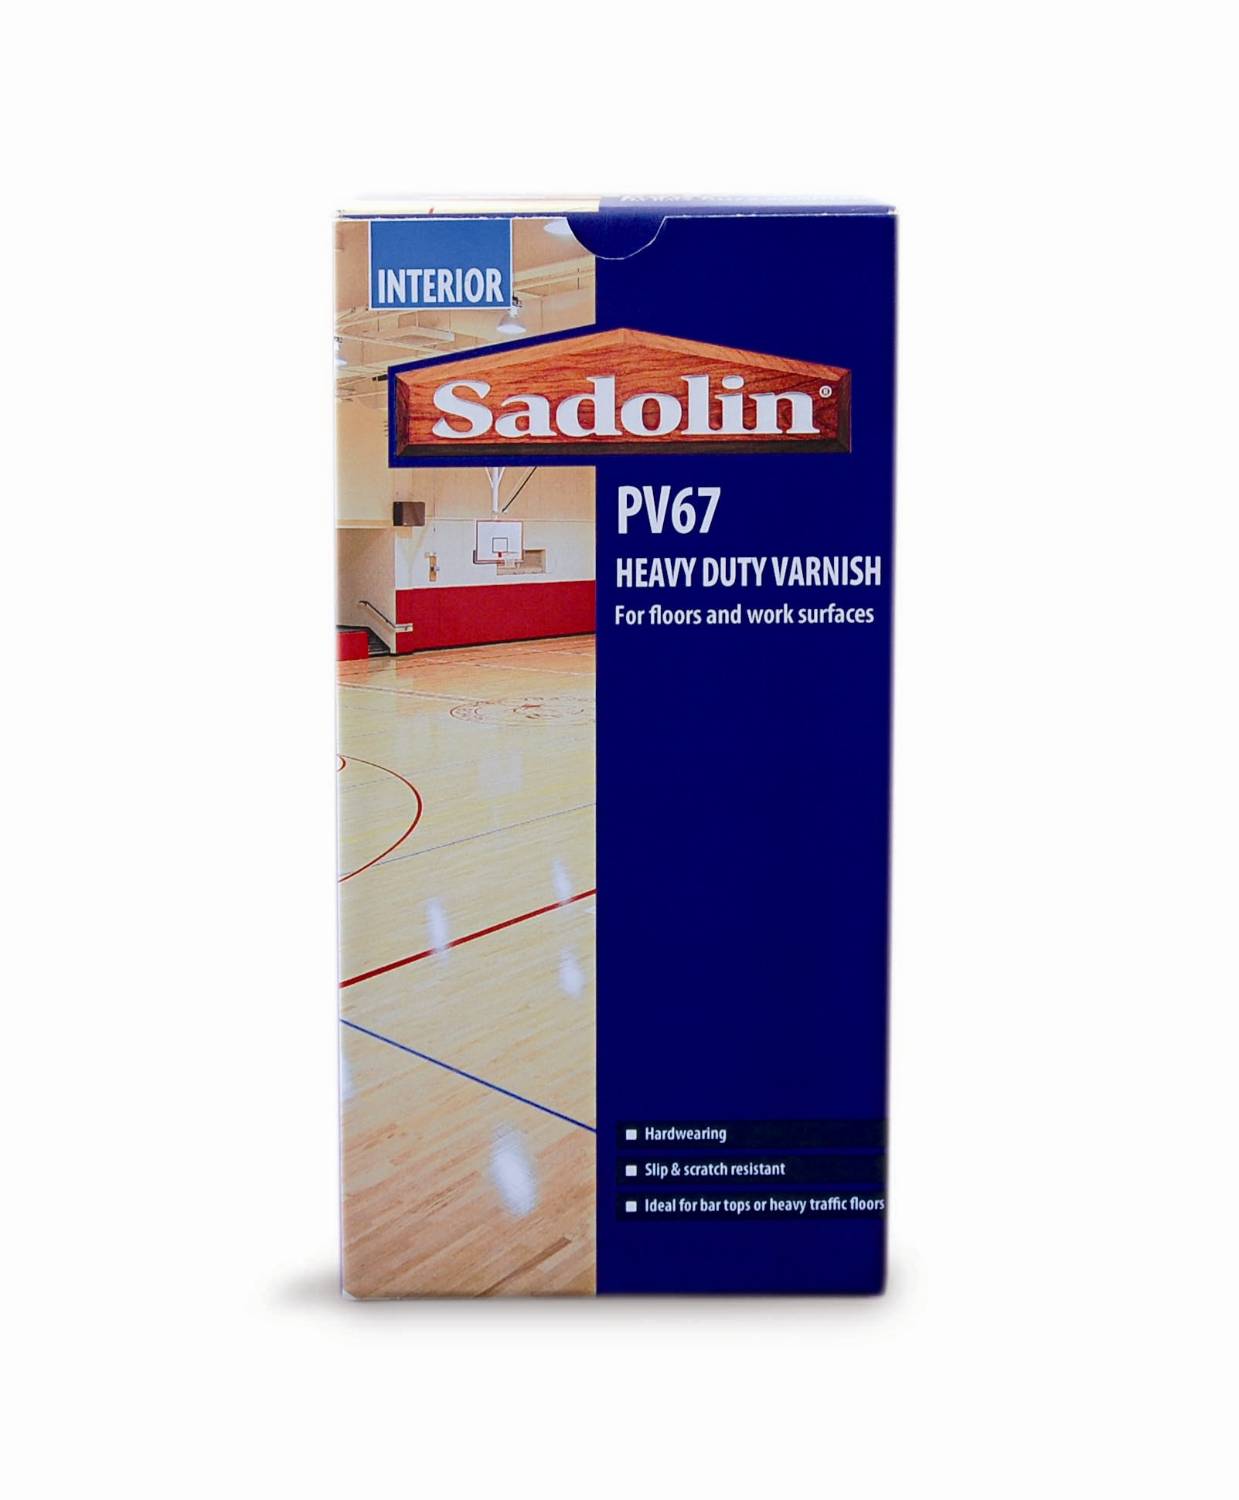 Crown Trade Sadolin PV67 Heavy Duty Varnish